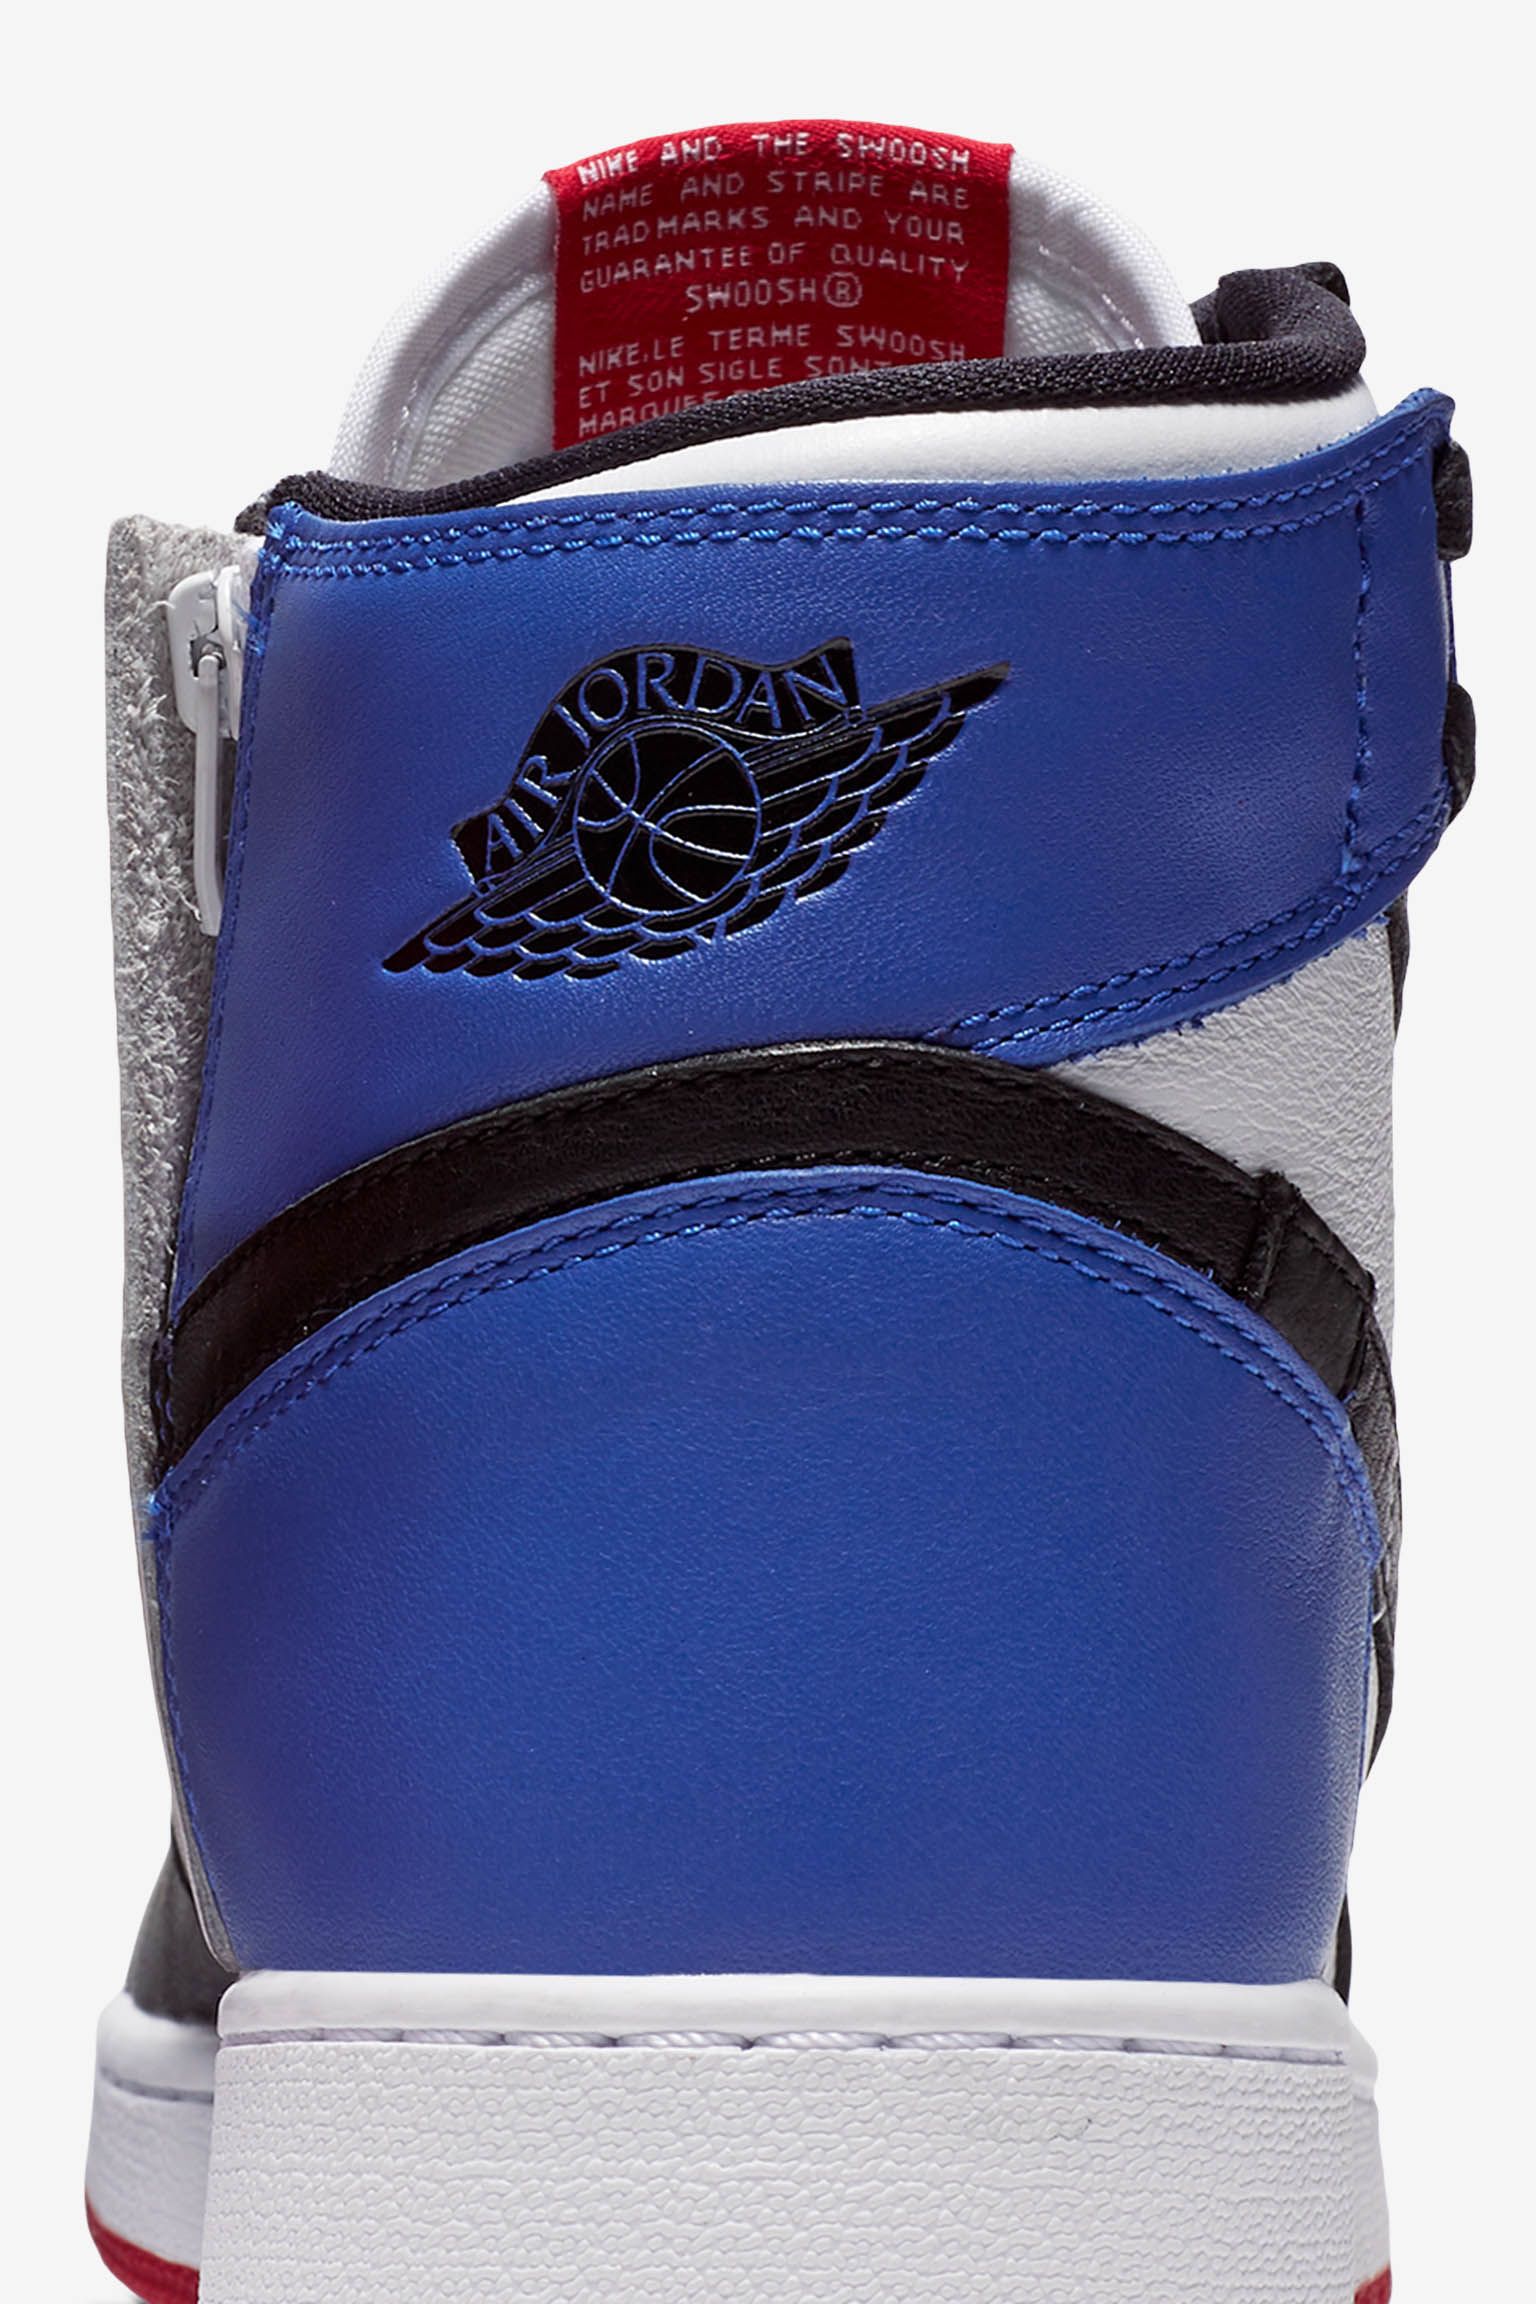 Women's Air Jordan 1 Rebel XX 'Top 3' Release Date. Nike SNKRS